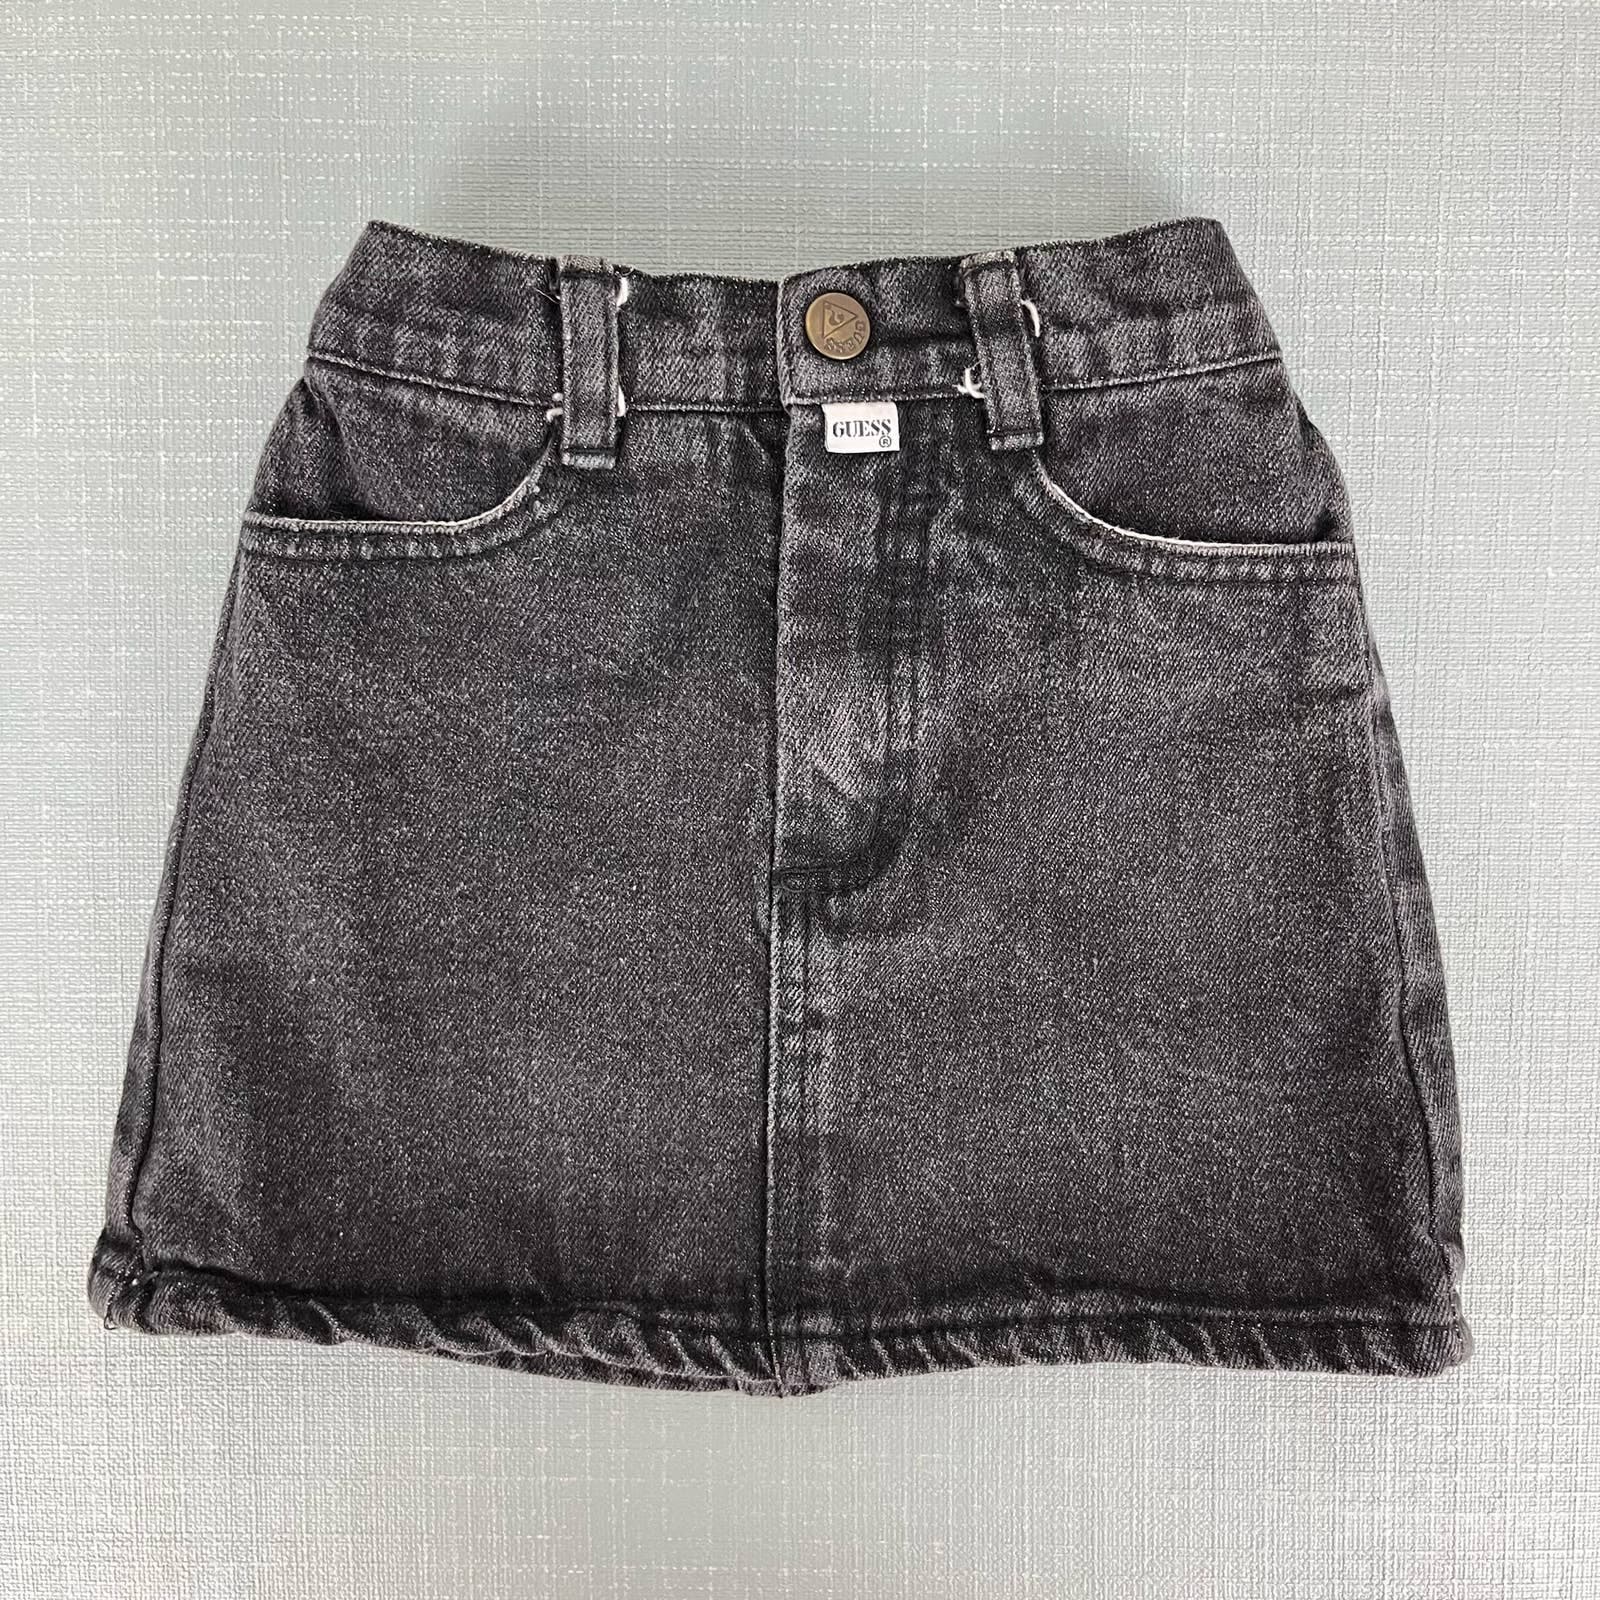 Vintage Guess Black Denim Skirt 2T USA